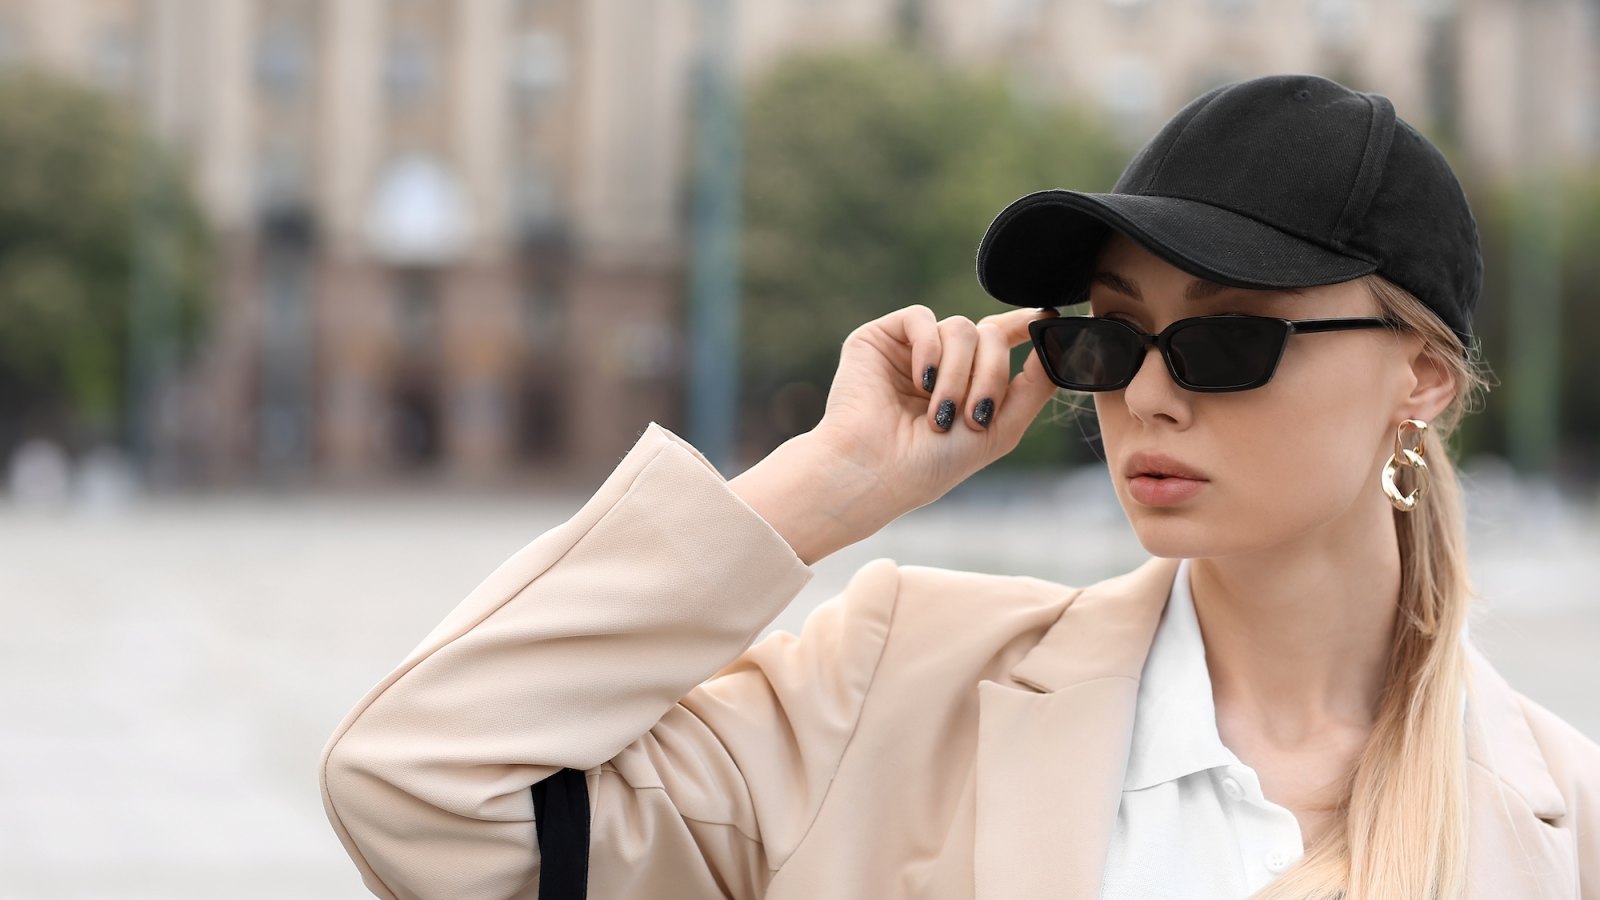 Keeping It Real Square Sunglasses - Black, Fashion Nova, Sunglasses